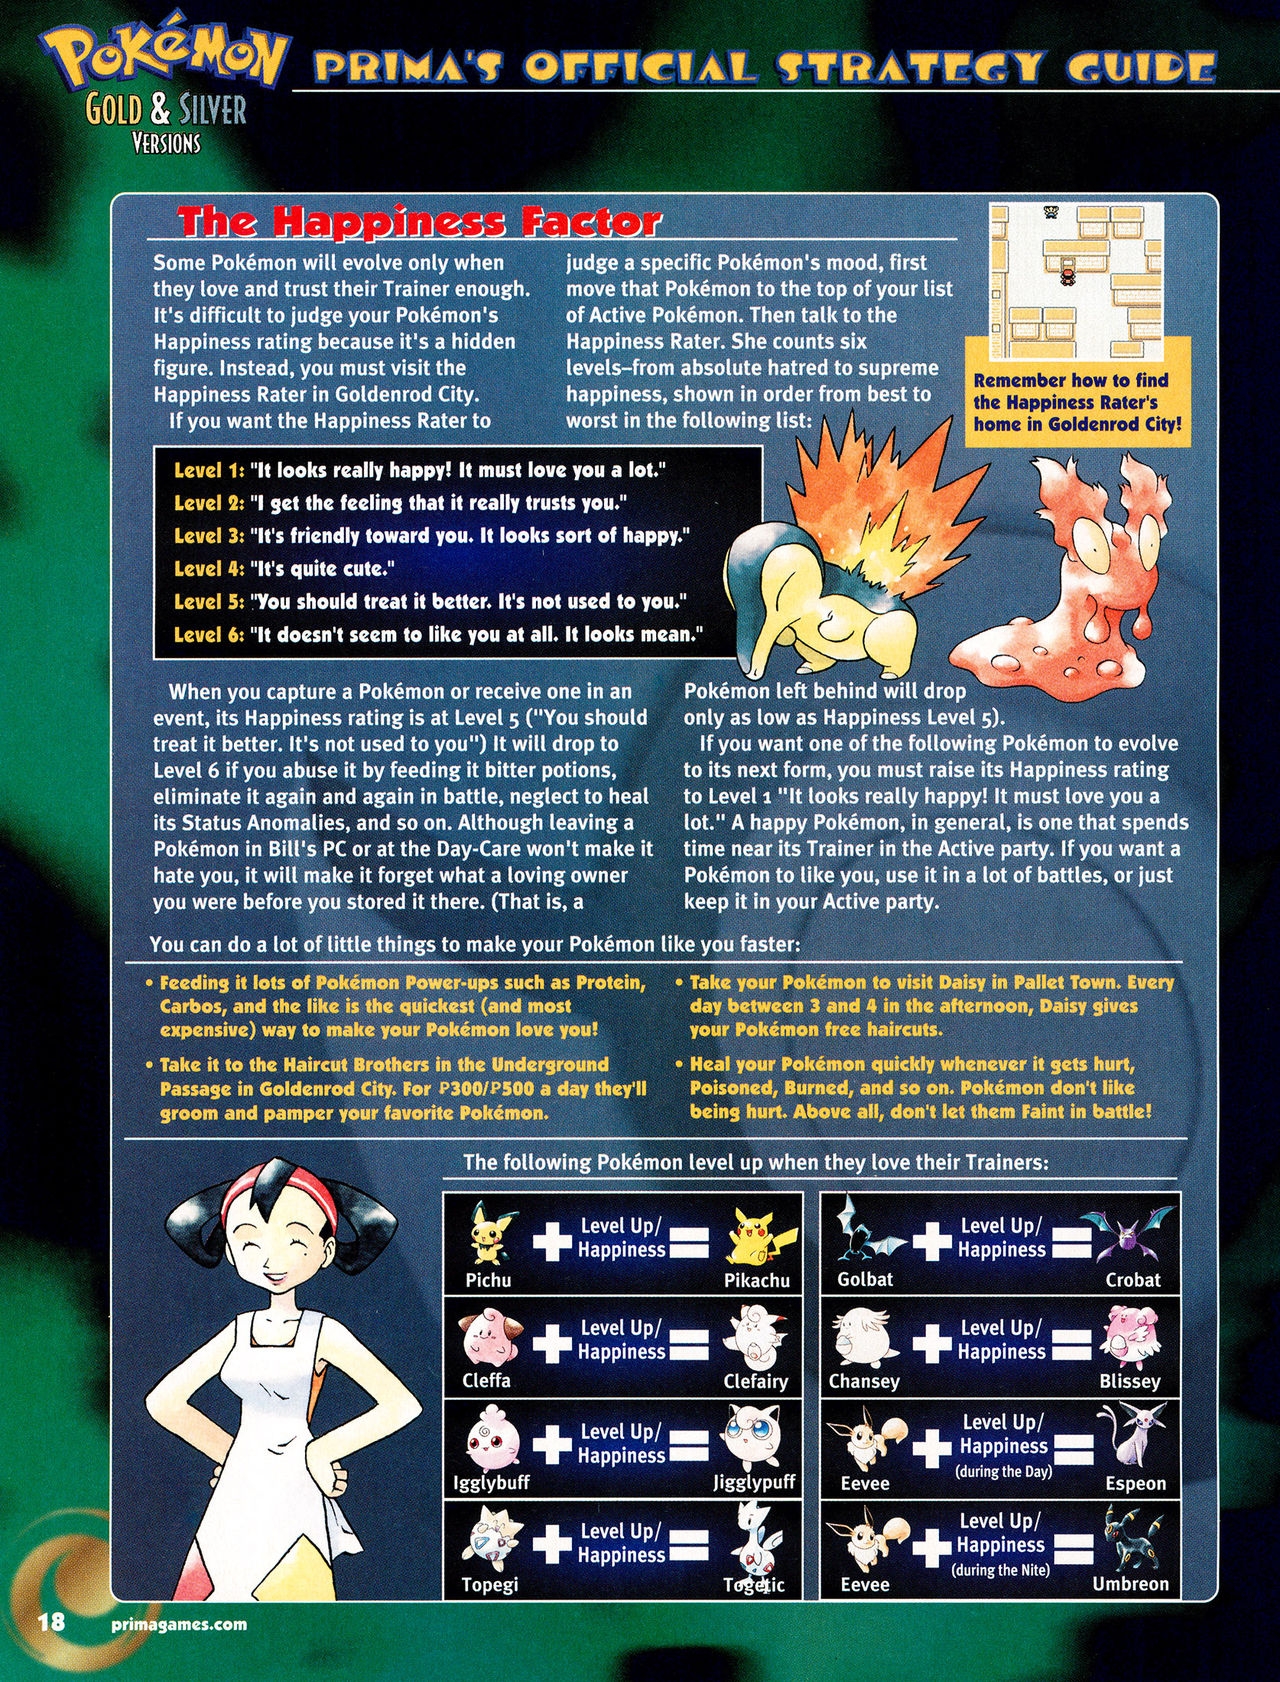 Pokémon Gold & Silver Versions - Strategy Guide 19